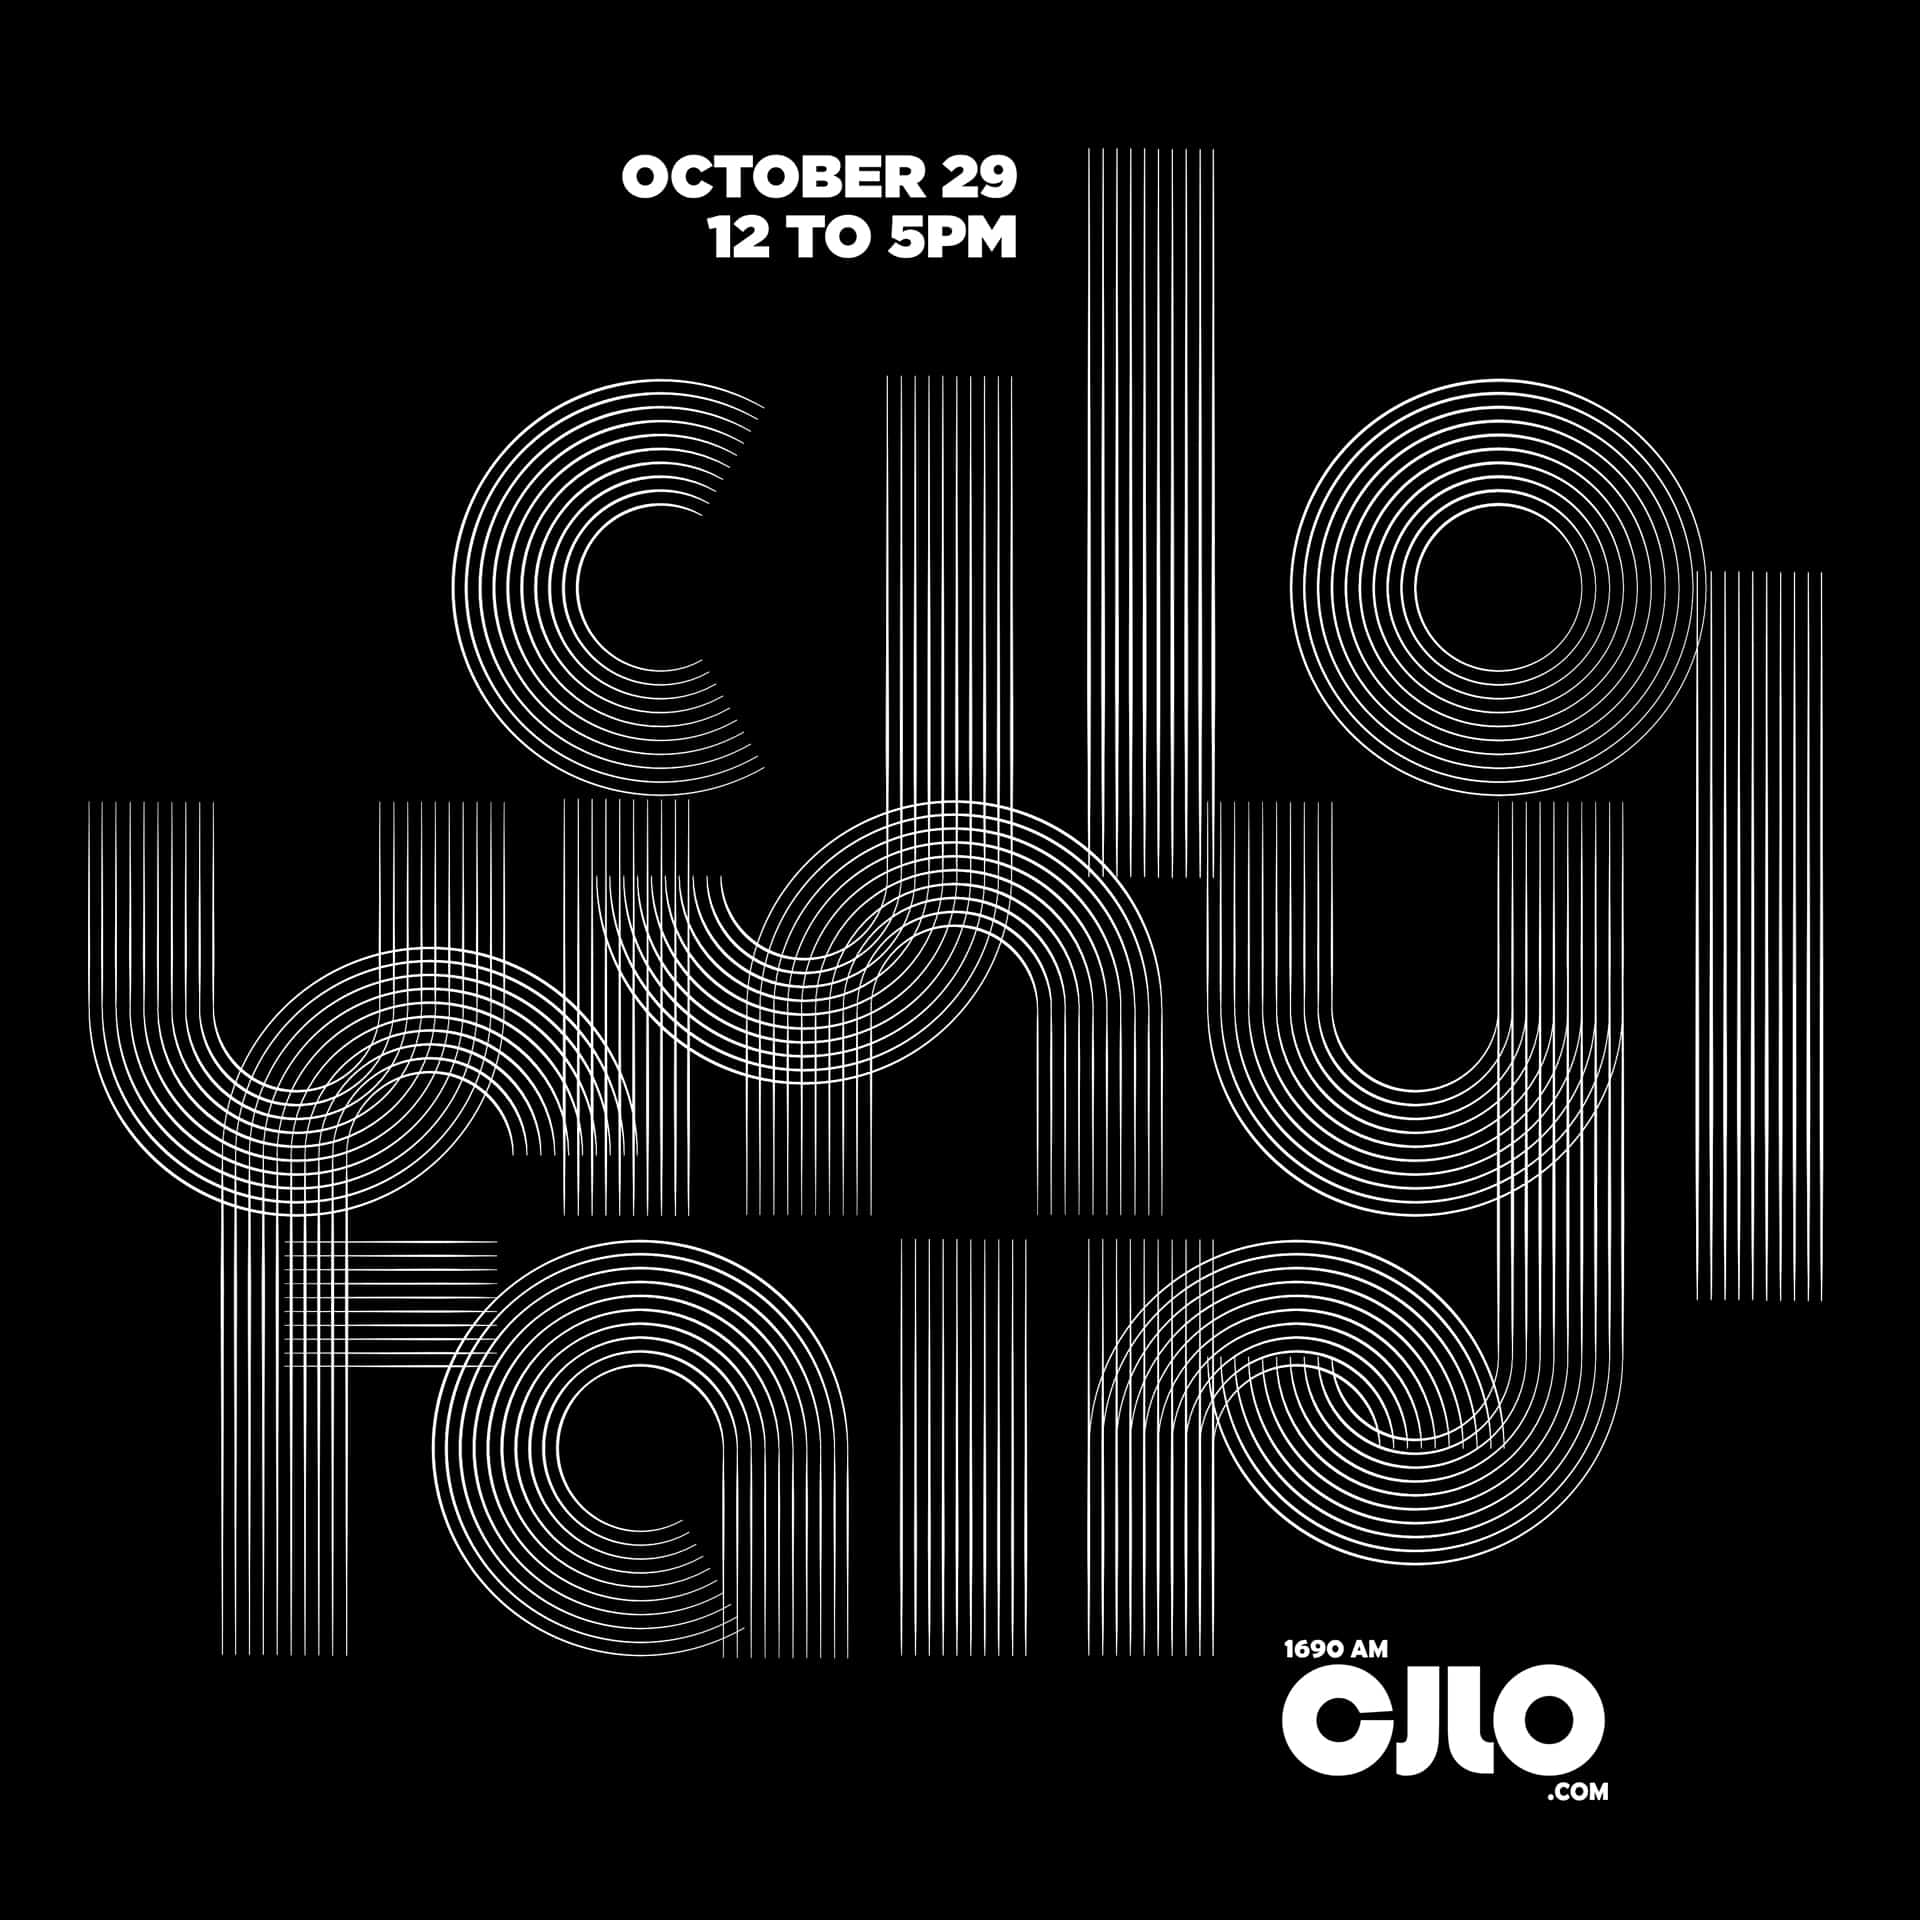 CJLO 1690AM Presents: CJLO Vinyl Fair